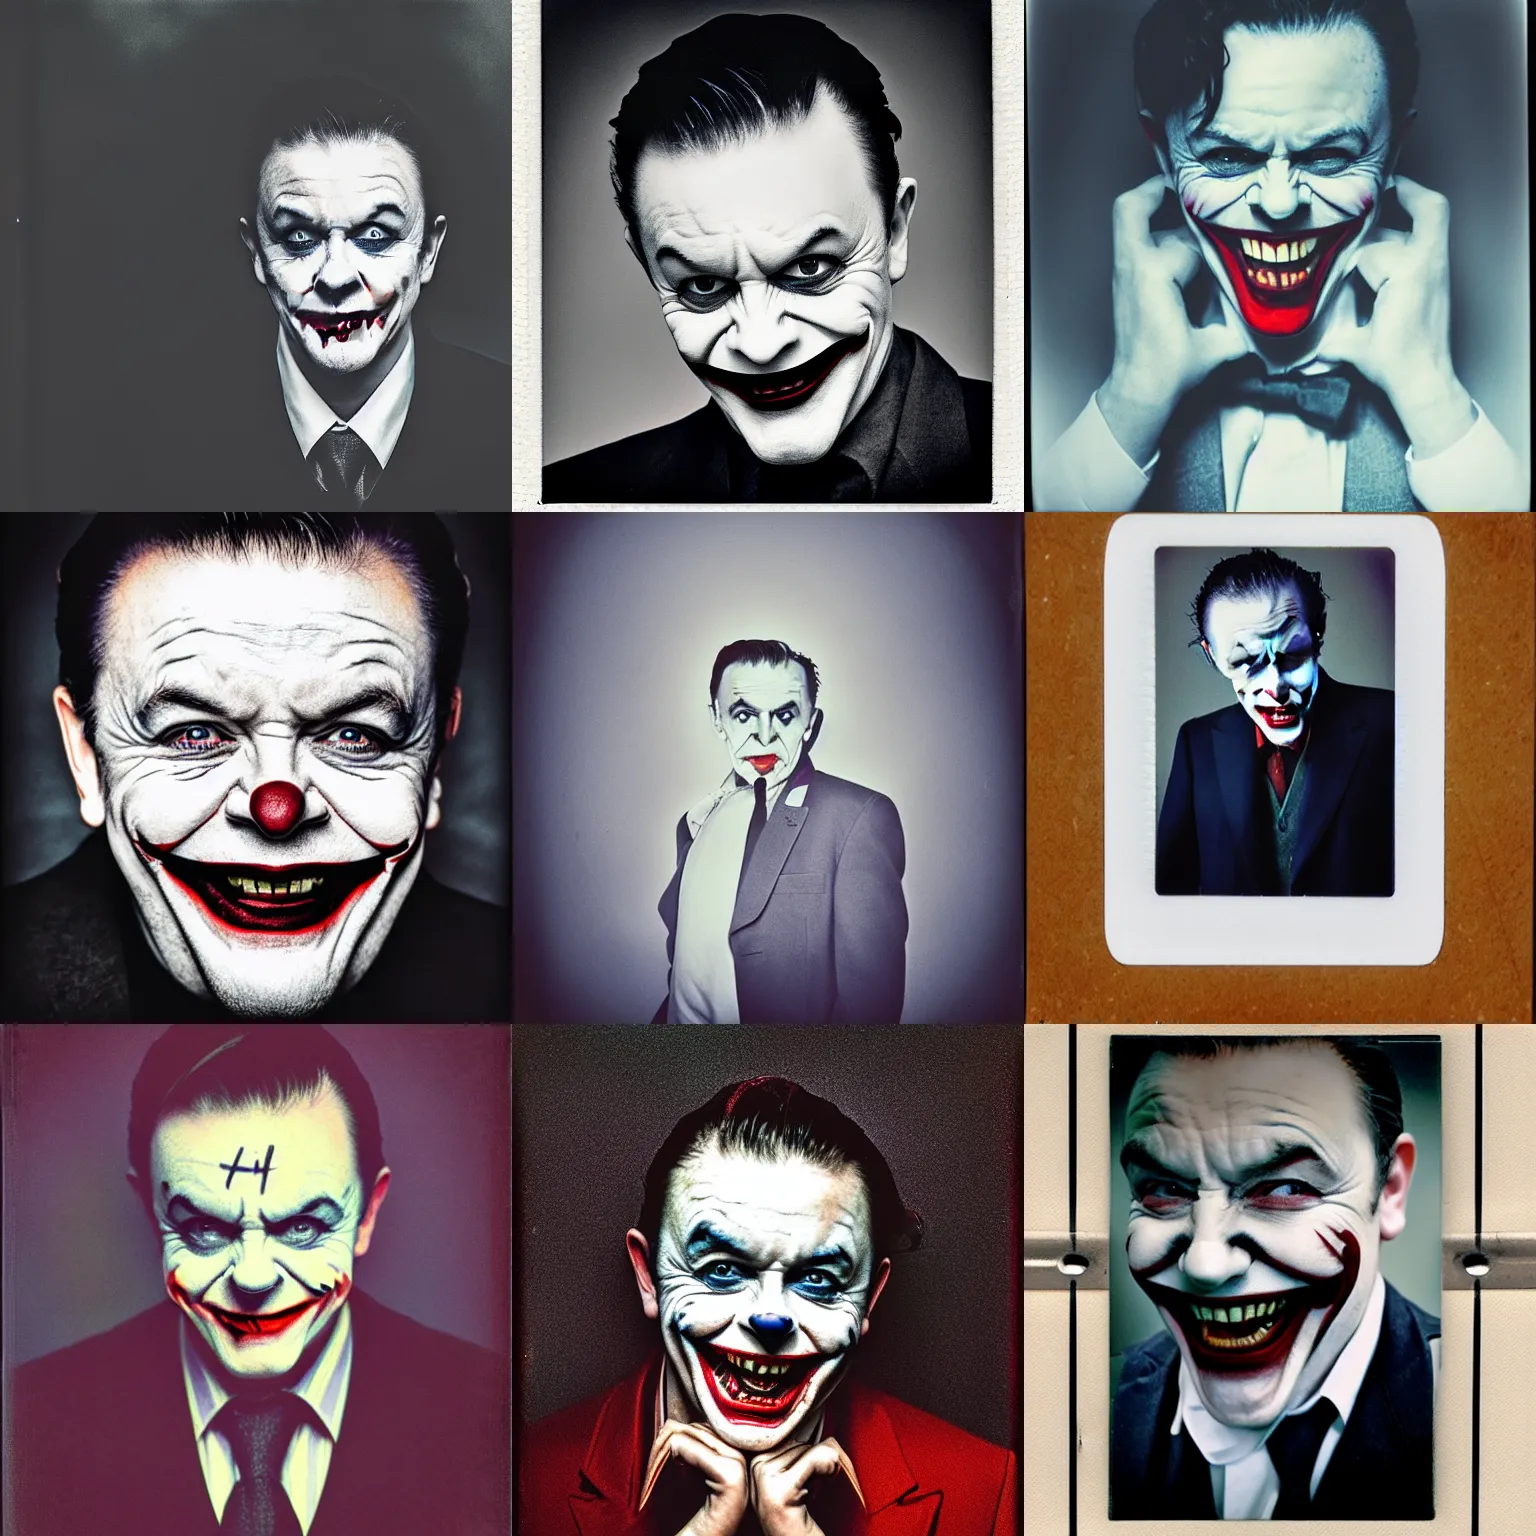 Prompt: Ricky Gervais as the joker, polaroid photograph, 4k, dramatic lighting